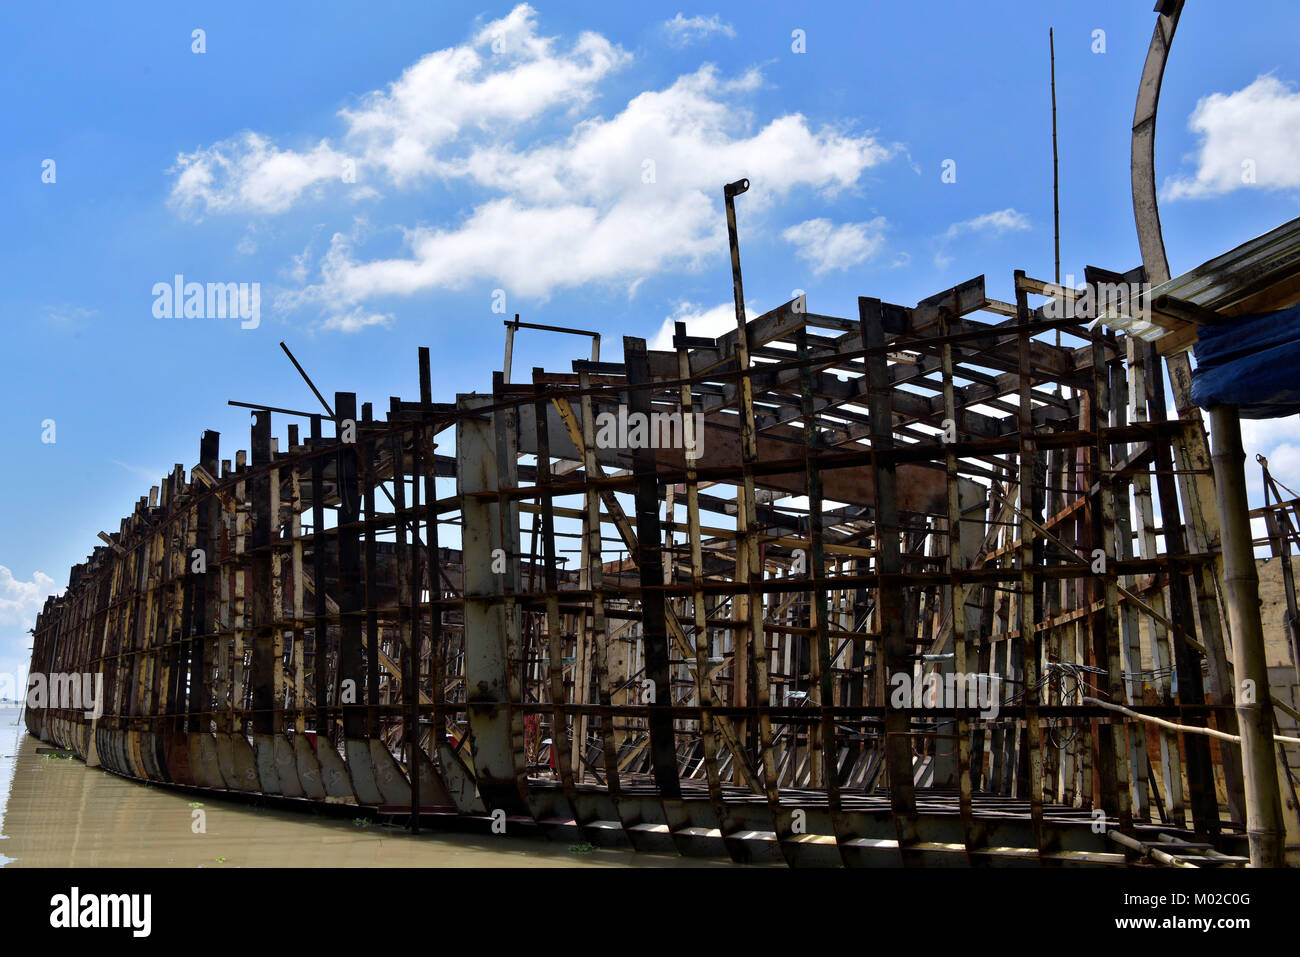 DHAKA, BANGLADESH – AUGUST 19, 2017: Bangladeshi workers build a ship at a shipbuilding yard on the bank of River Padma in Dohar, near Dhaka, Banglade Stock Photo